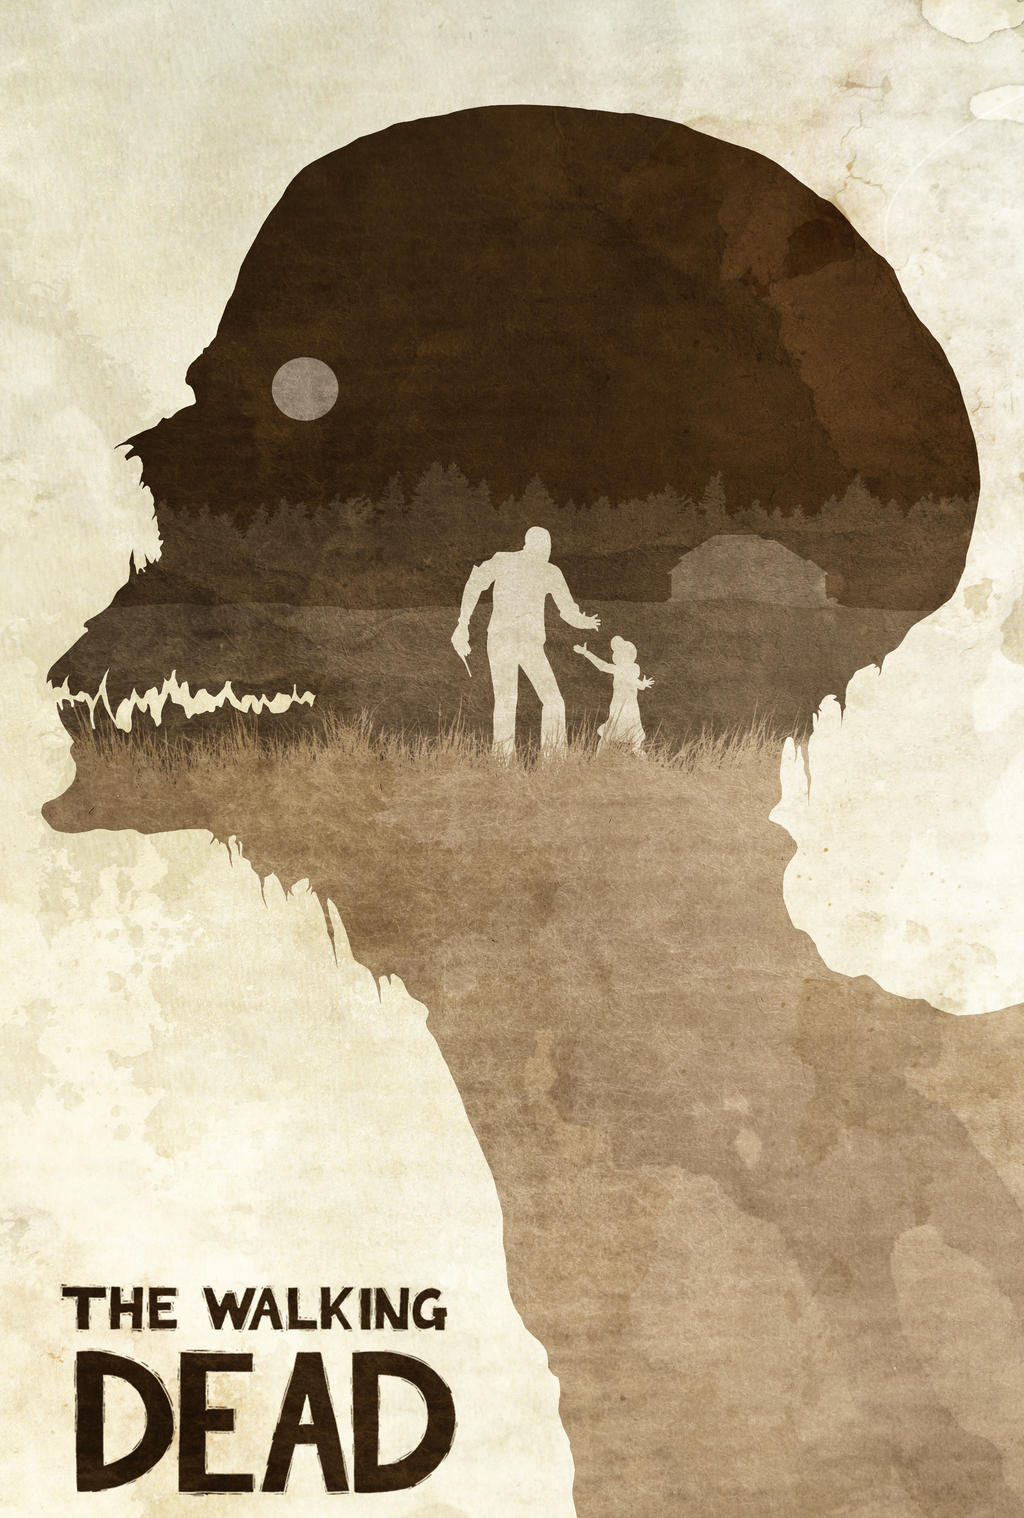 Don't Worry, Clementine - The Walking Dead Poster by edwardjmoran on  DeviantArt